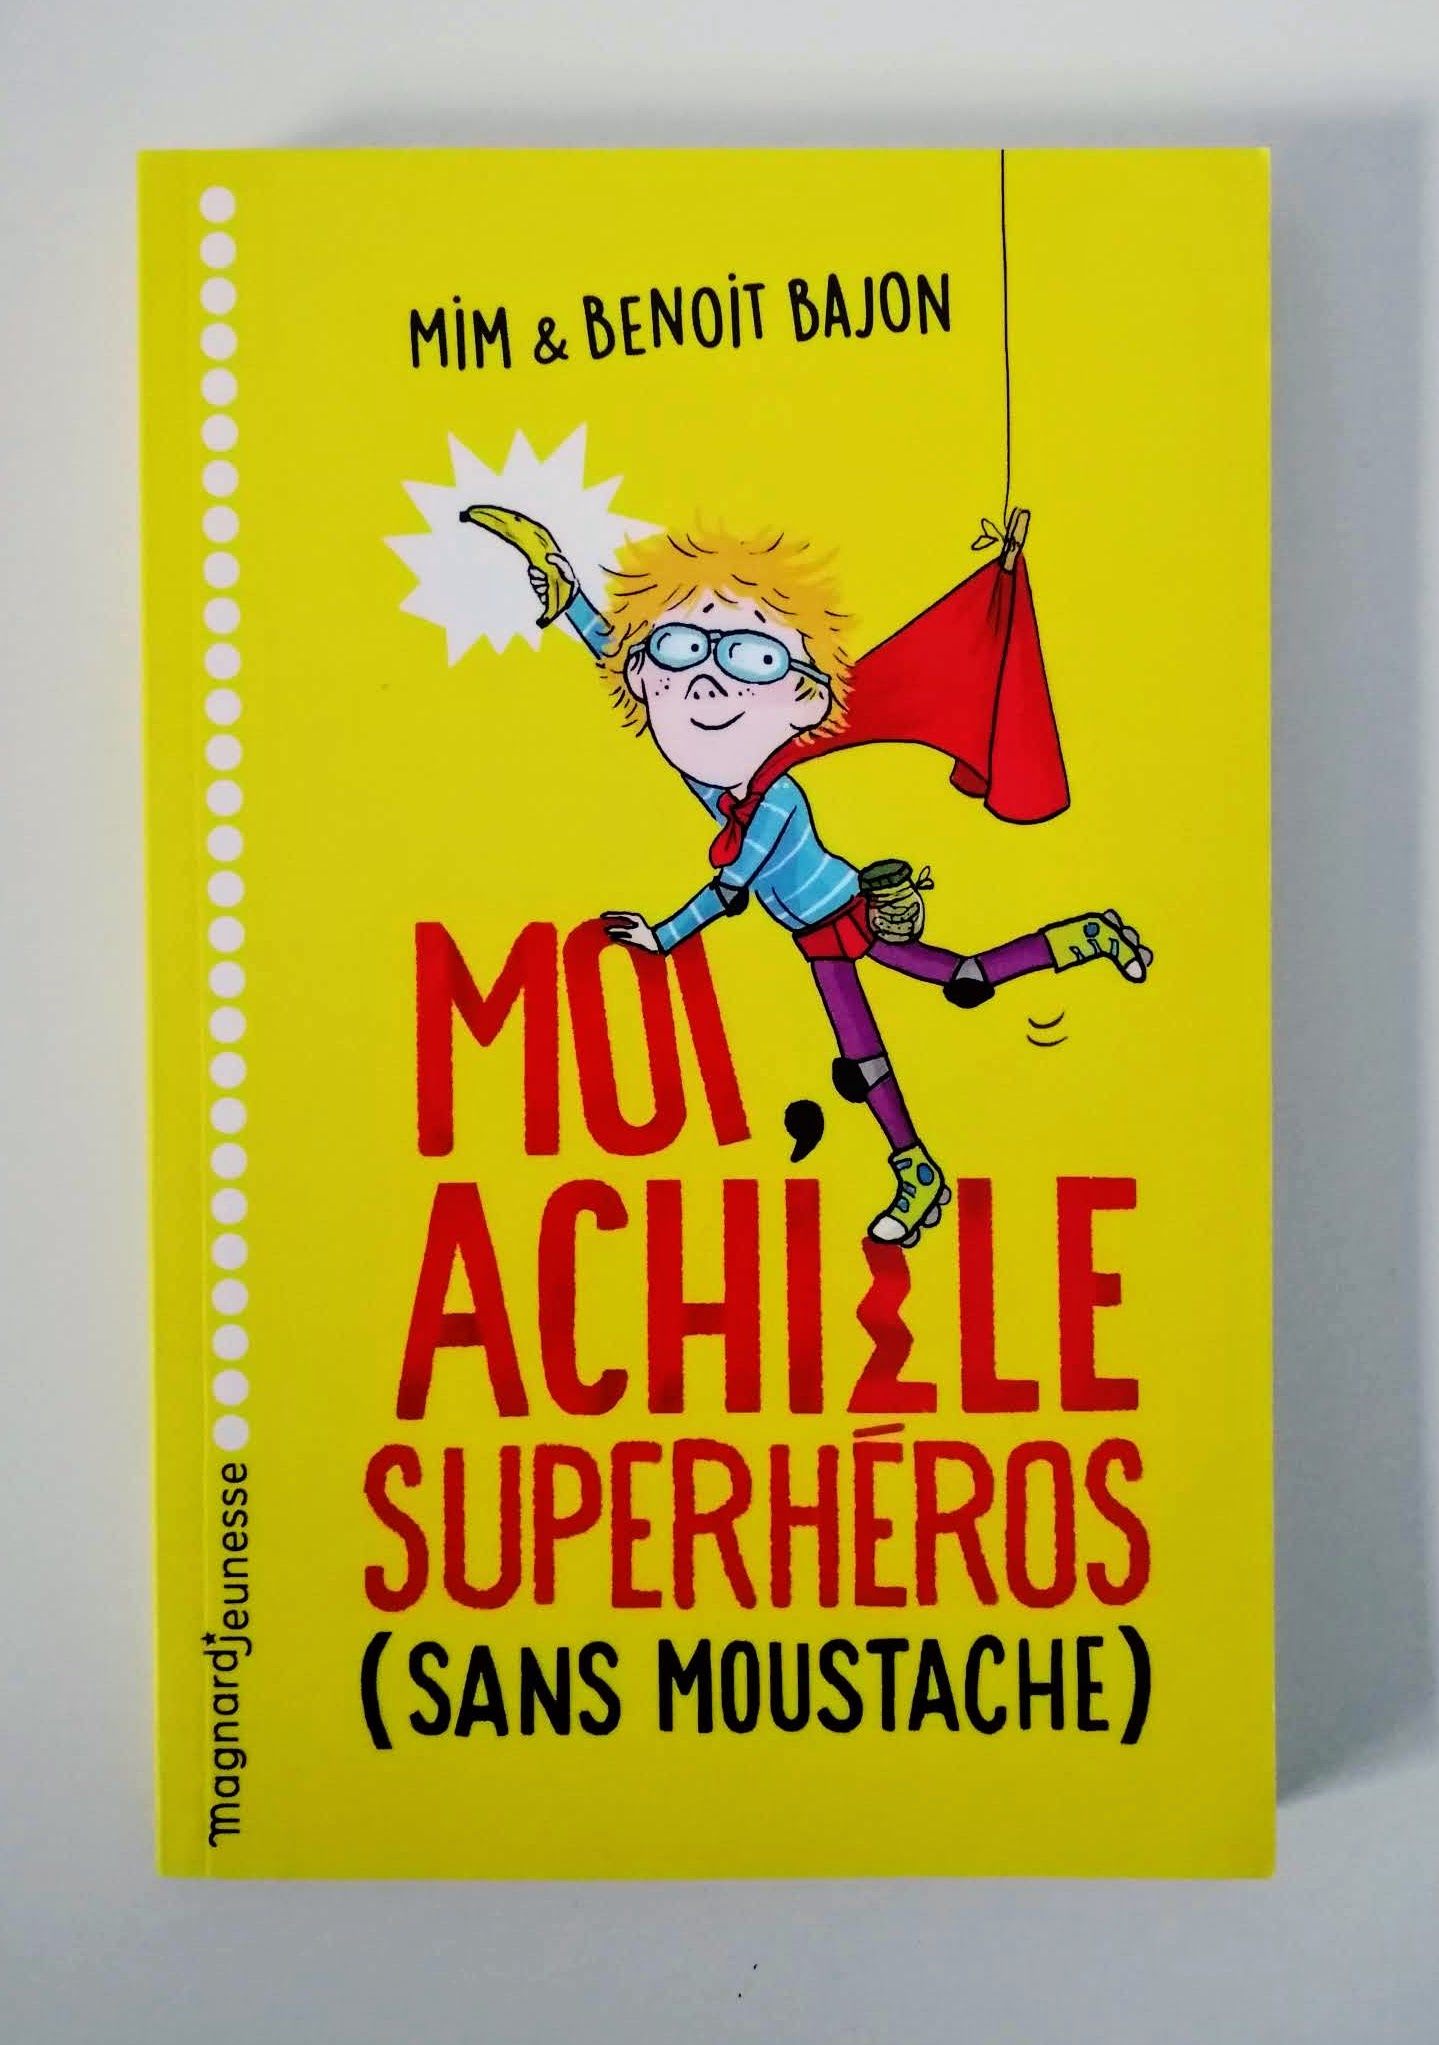 Moi Achille Superheros sans moustache Benoit Bajon Mim